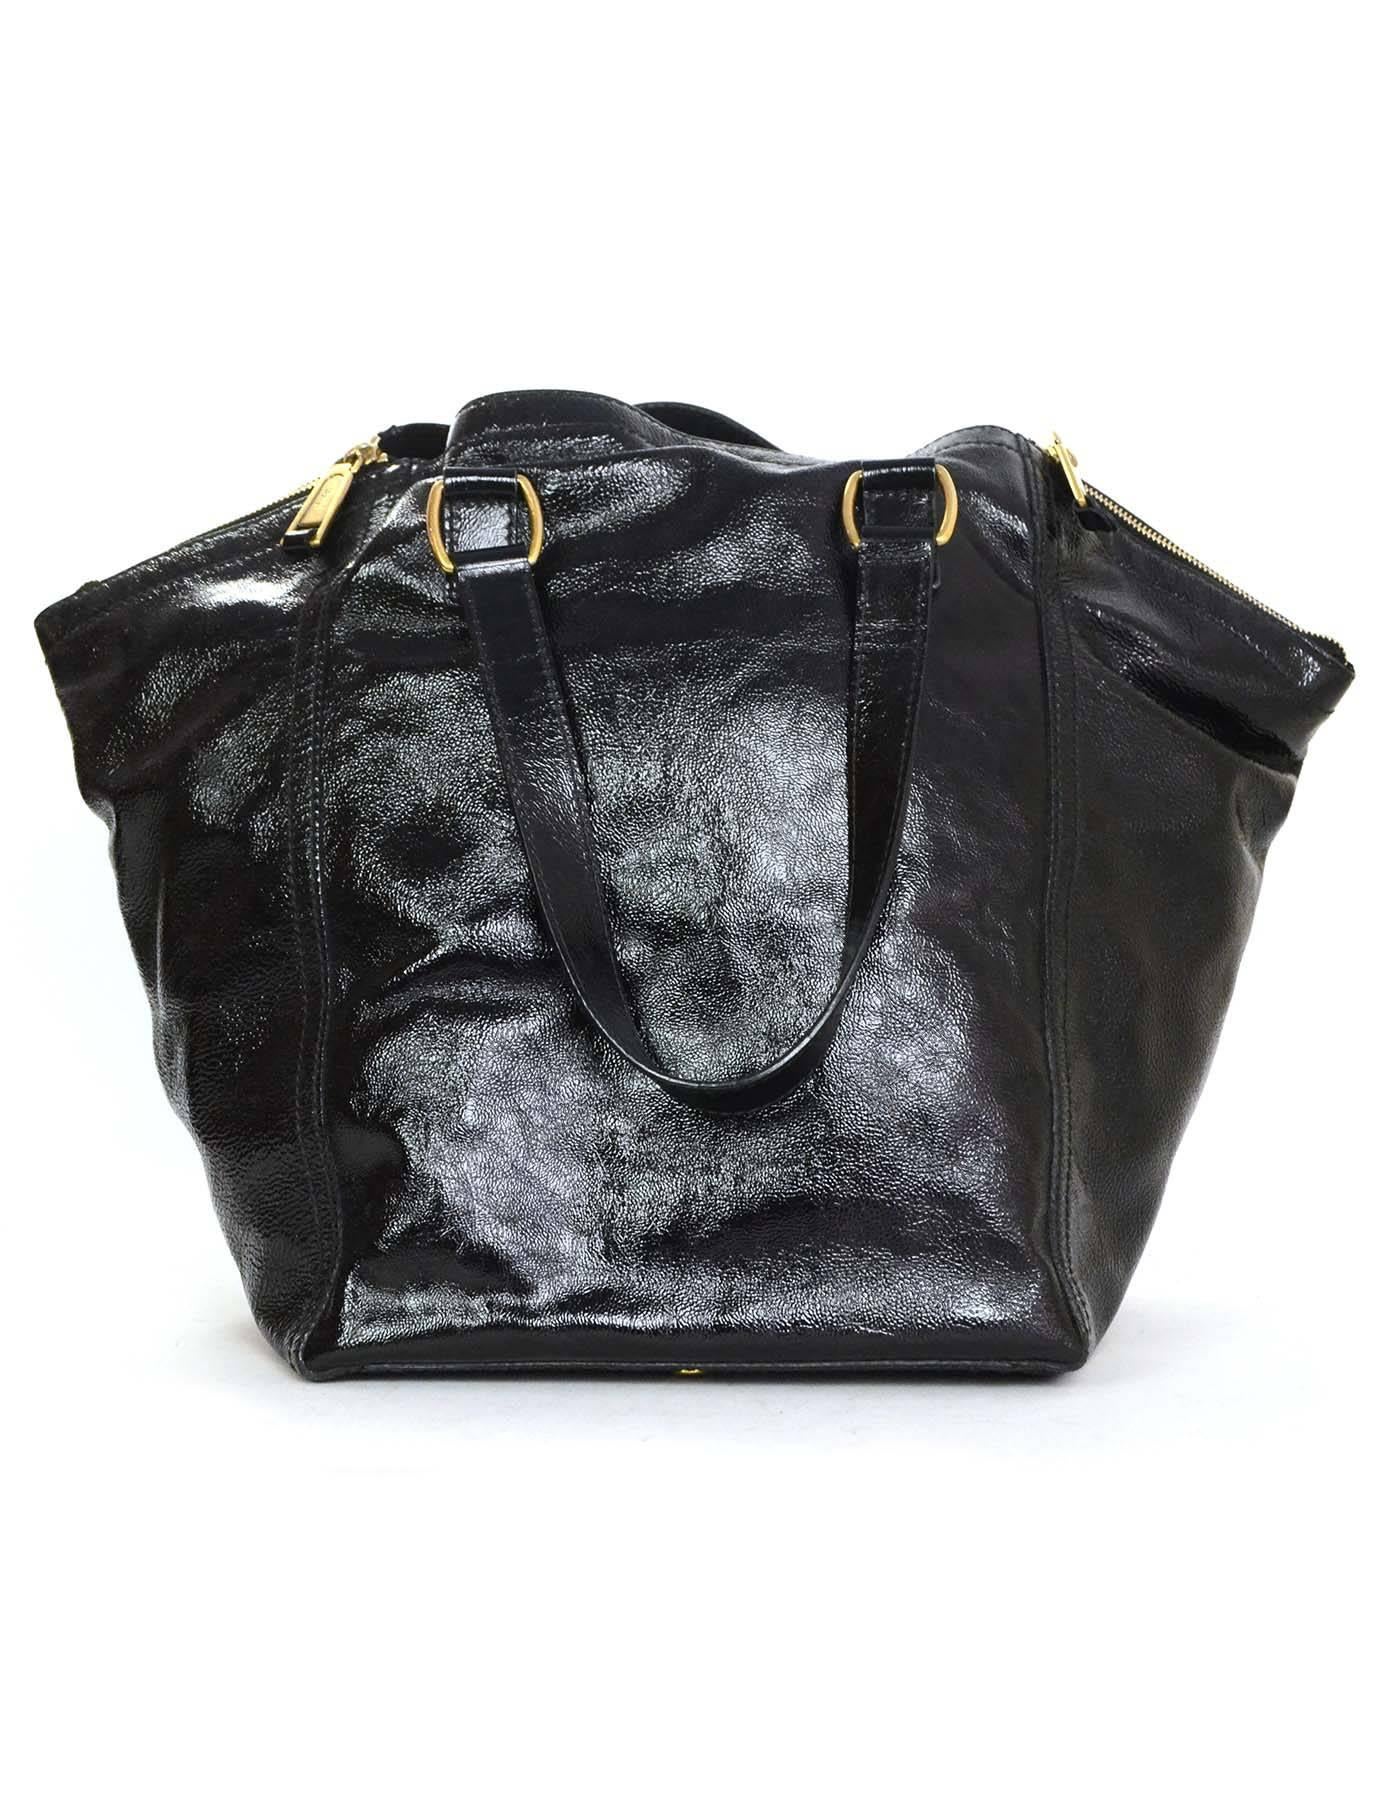 ysl black patent leather bag